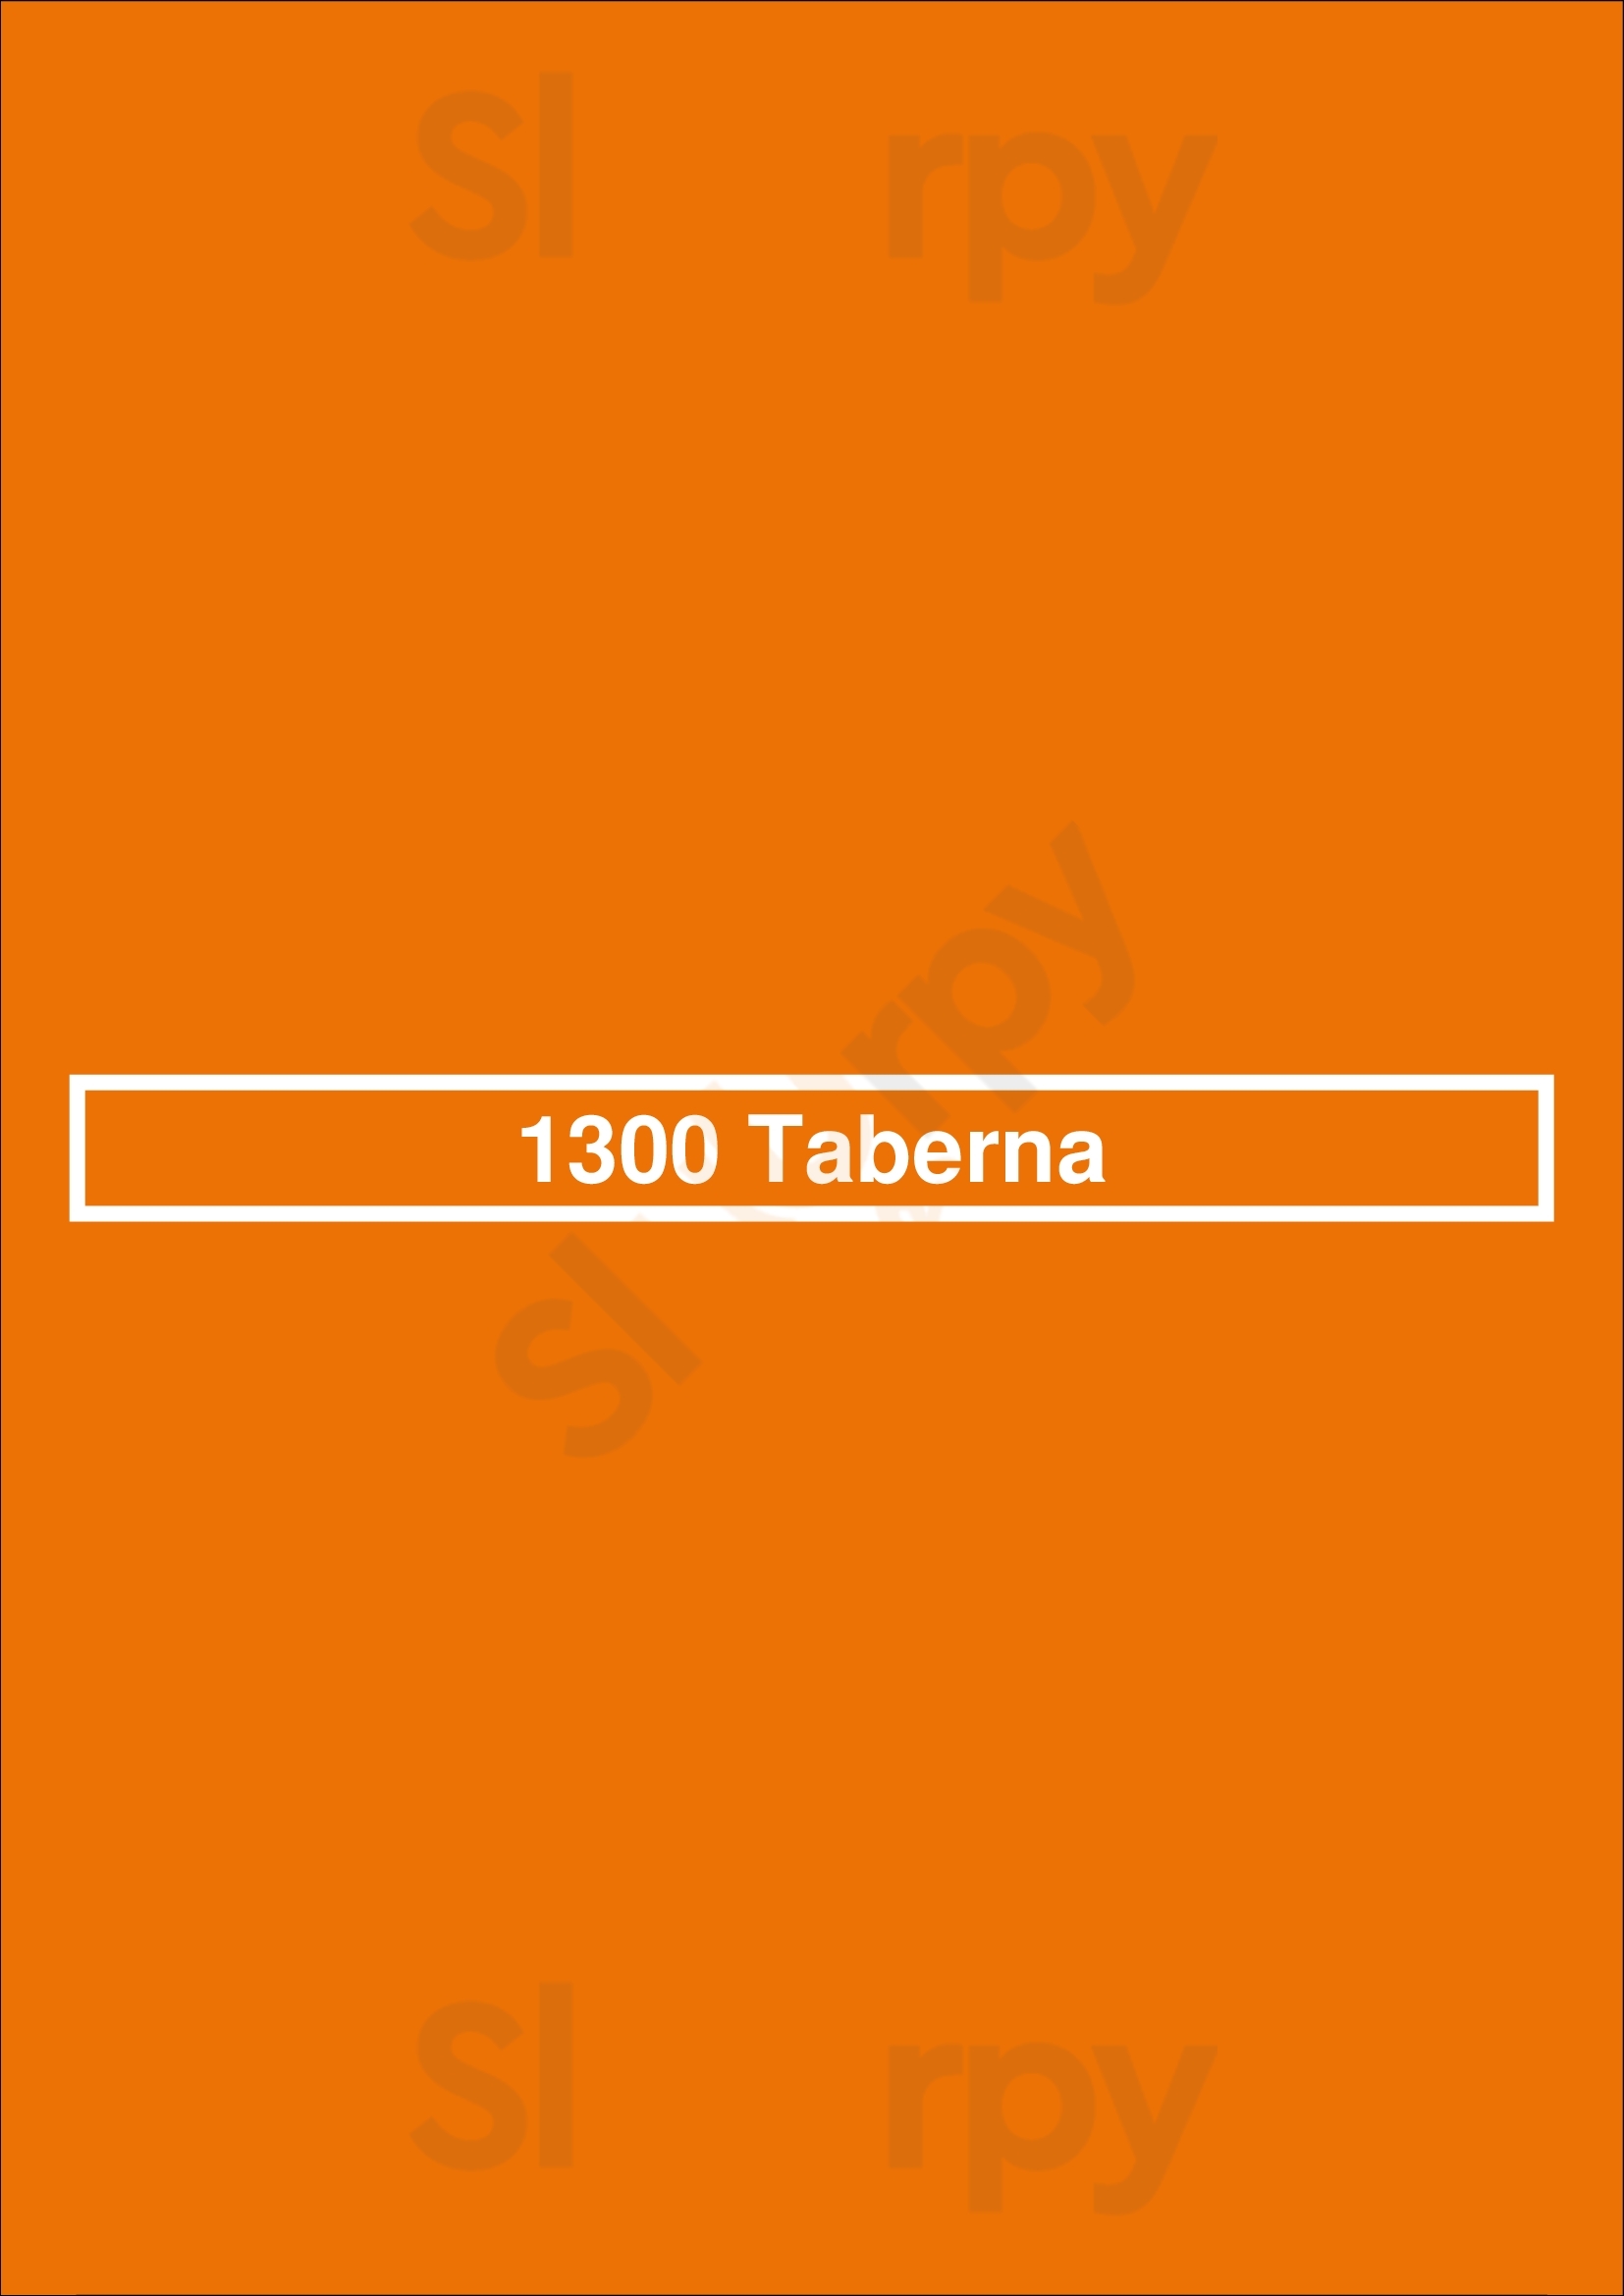 1300 Taberna Lisboa Menu - 1